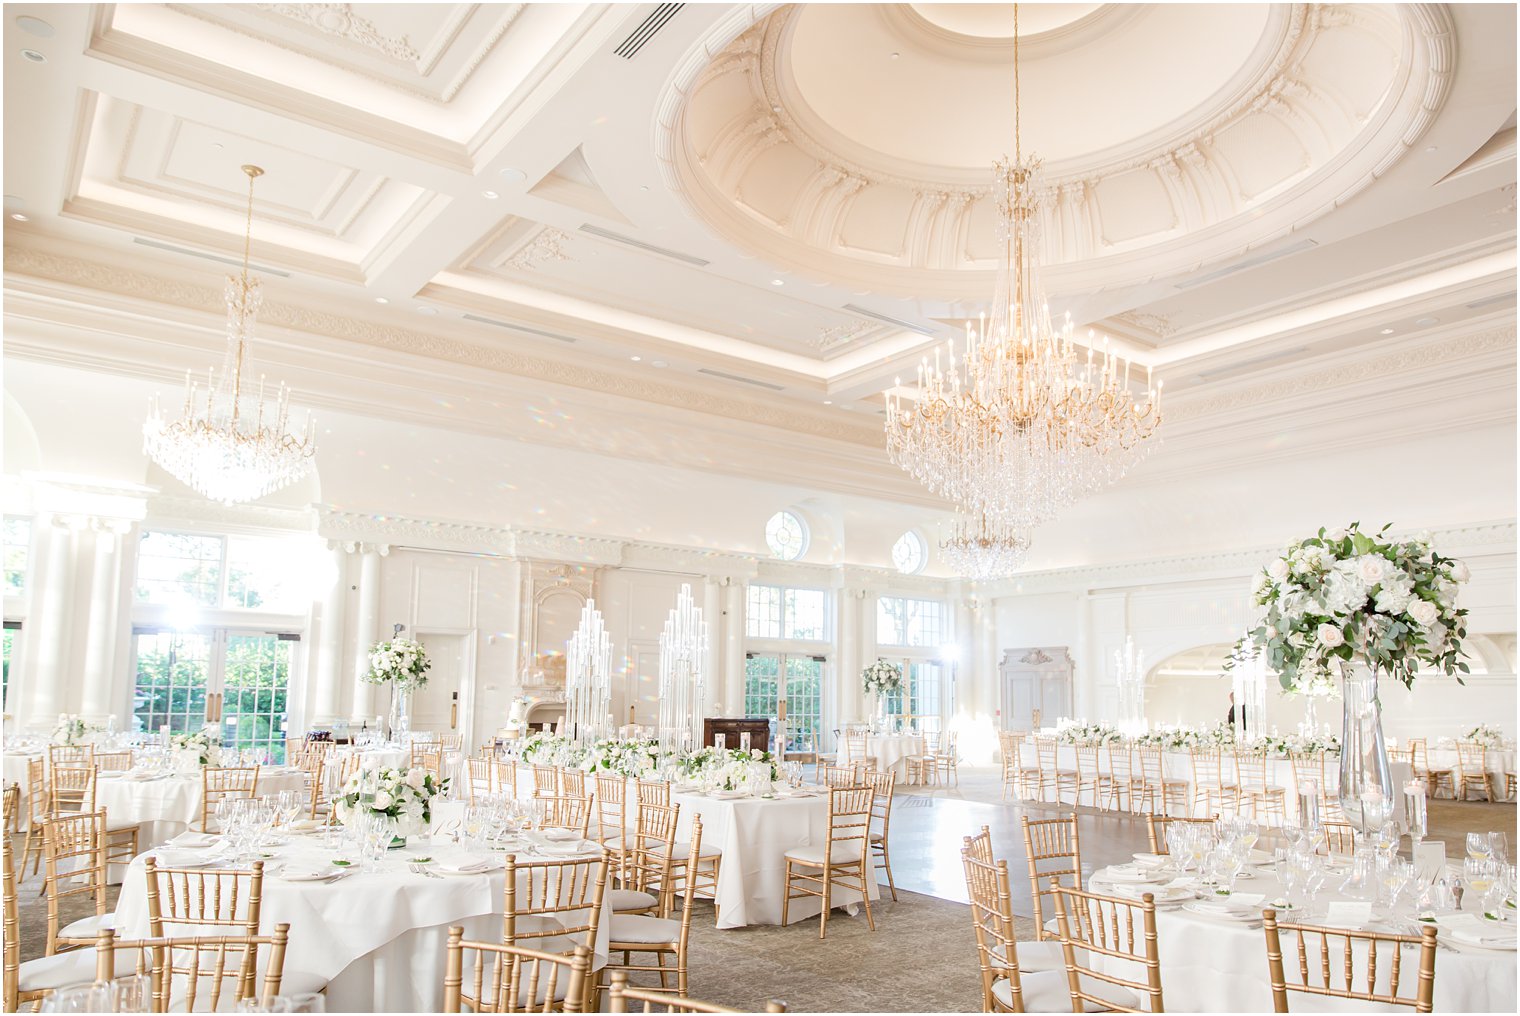 Ballroom at Park Chateau Estate Wedding Reception